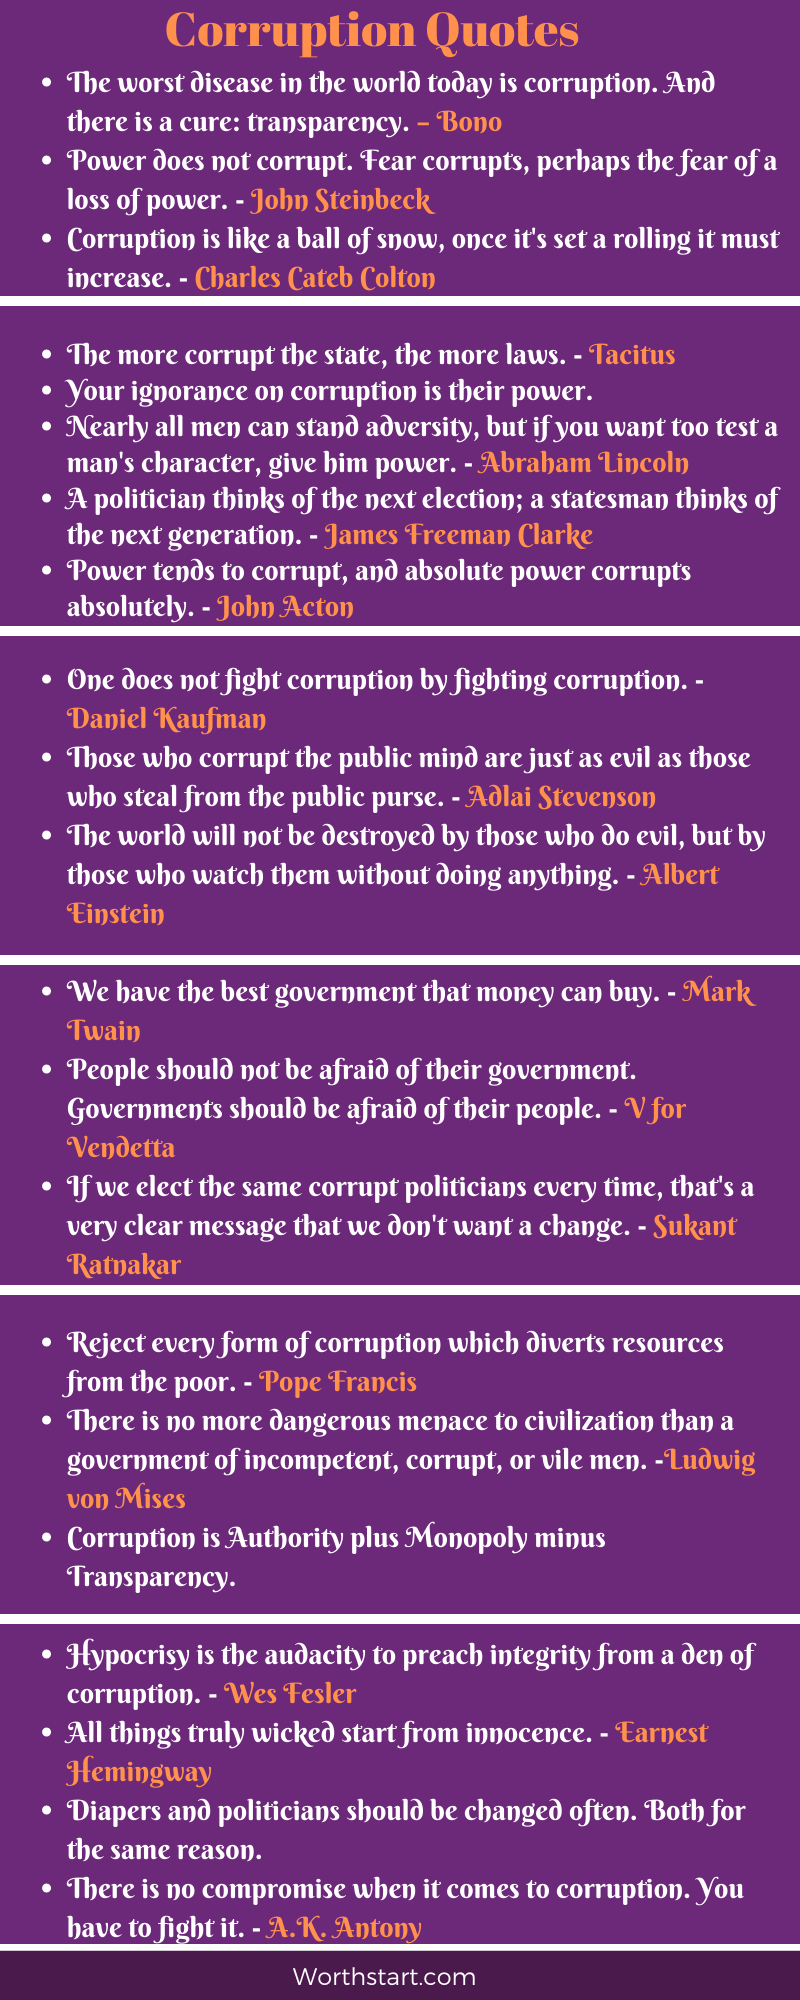 Corruption Quotes: 200+ Anti-Corruption Slogans And Quotes